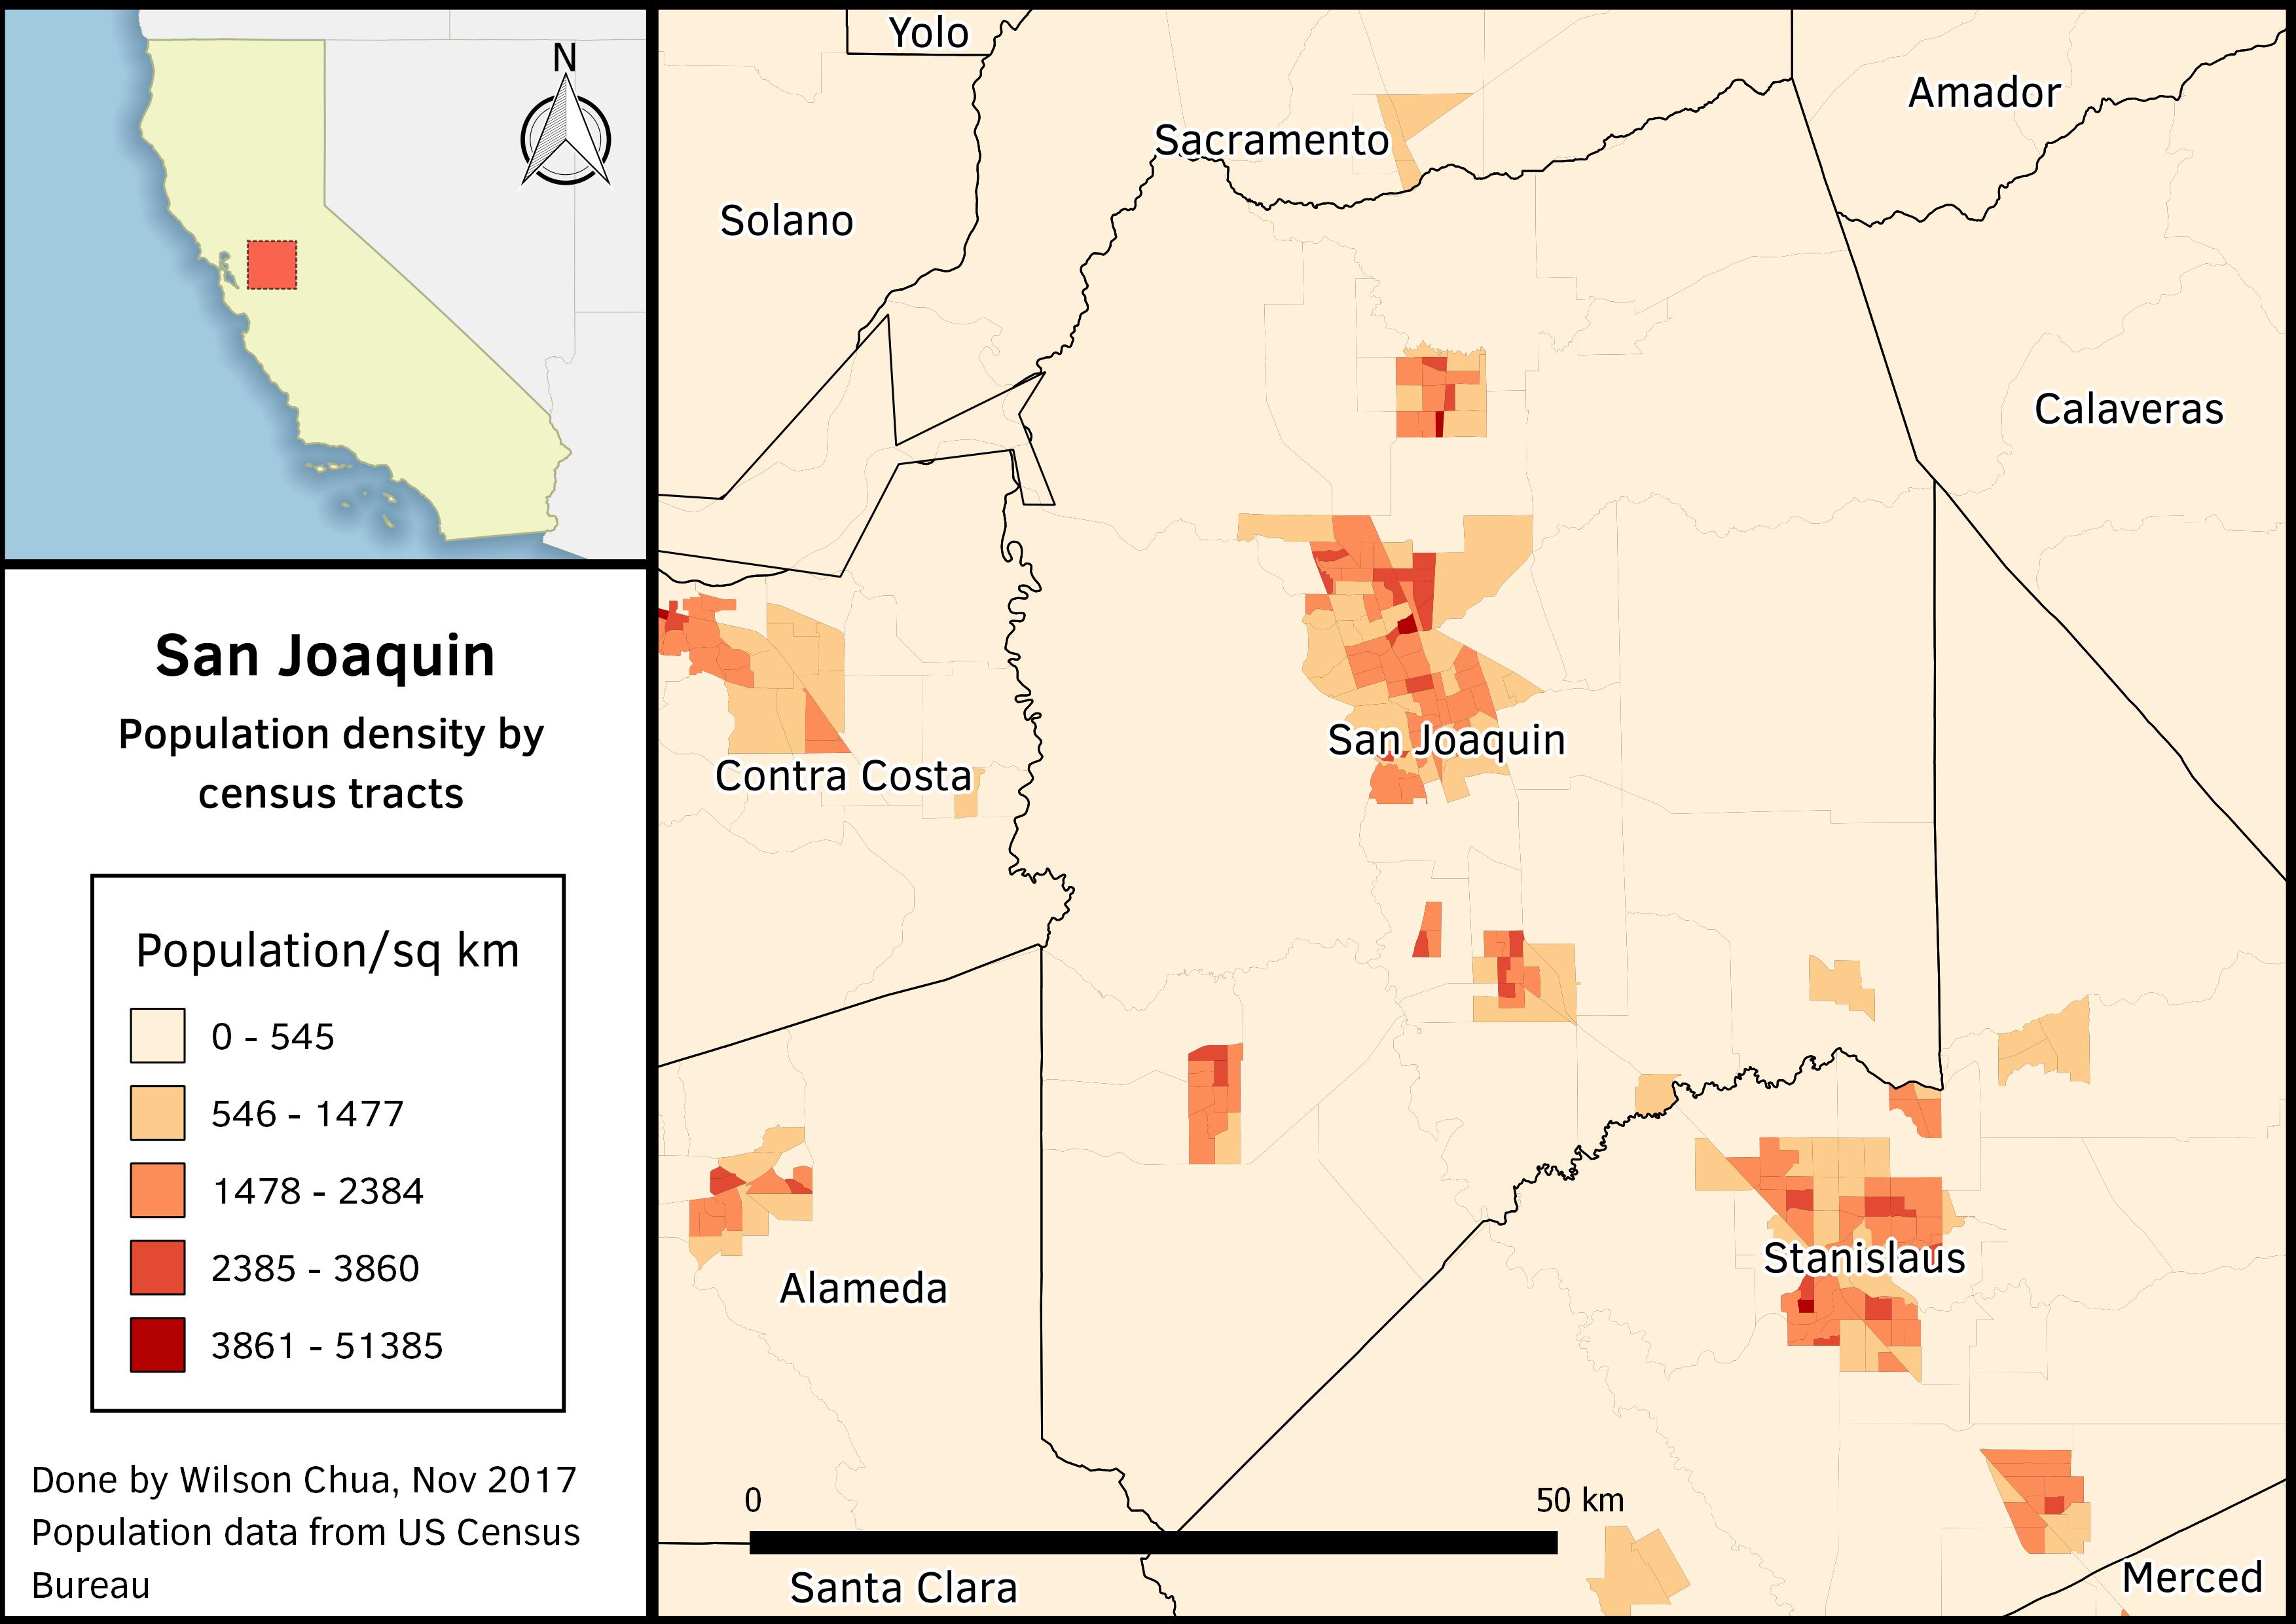 Population Density of San Joaquin, per Census Tract